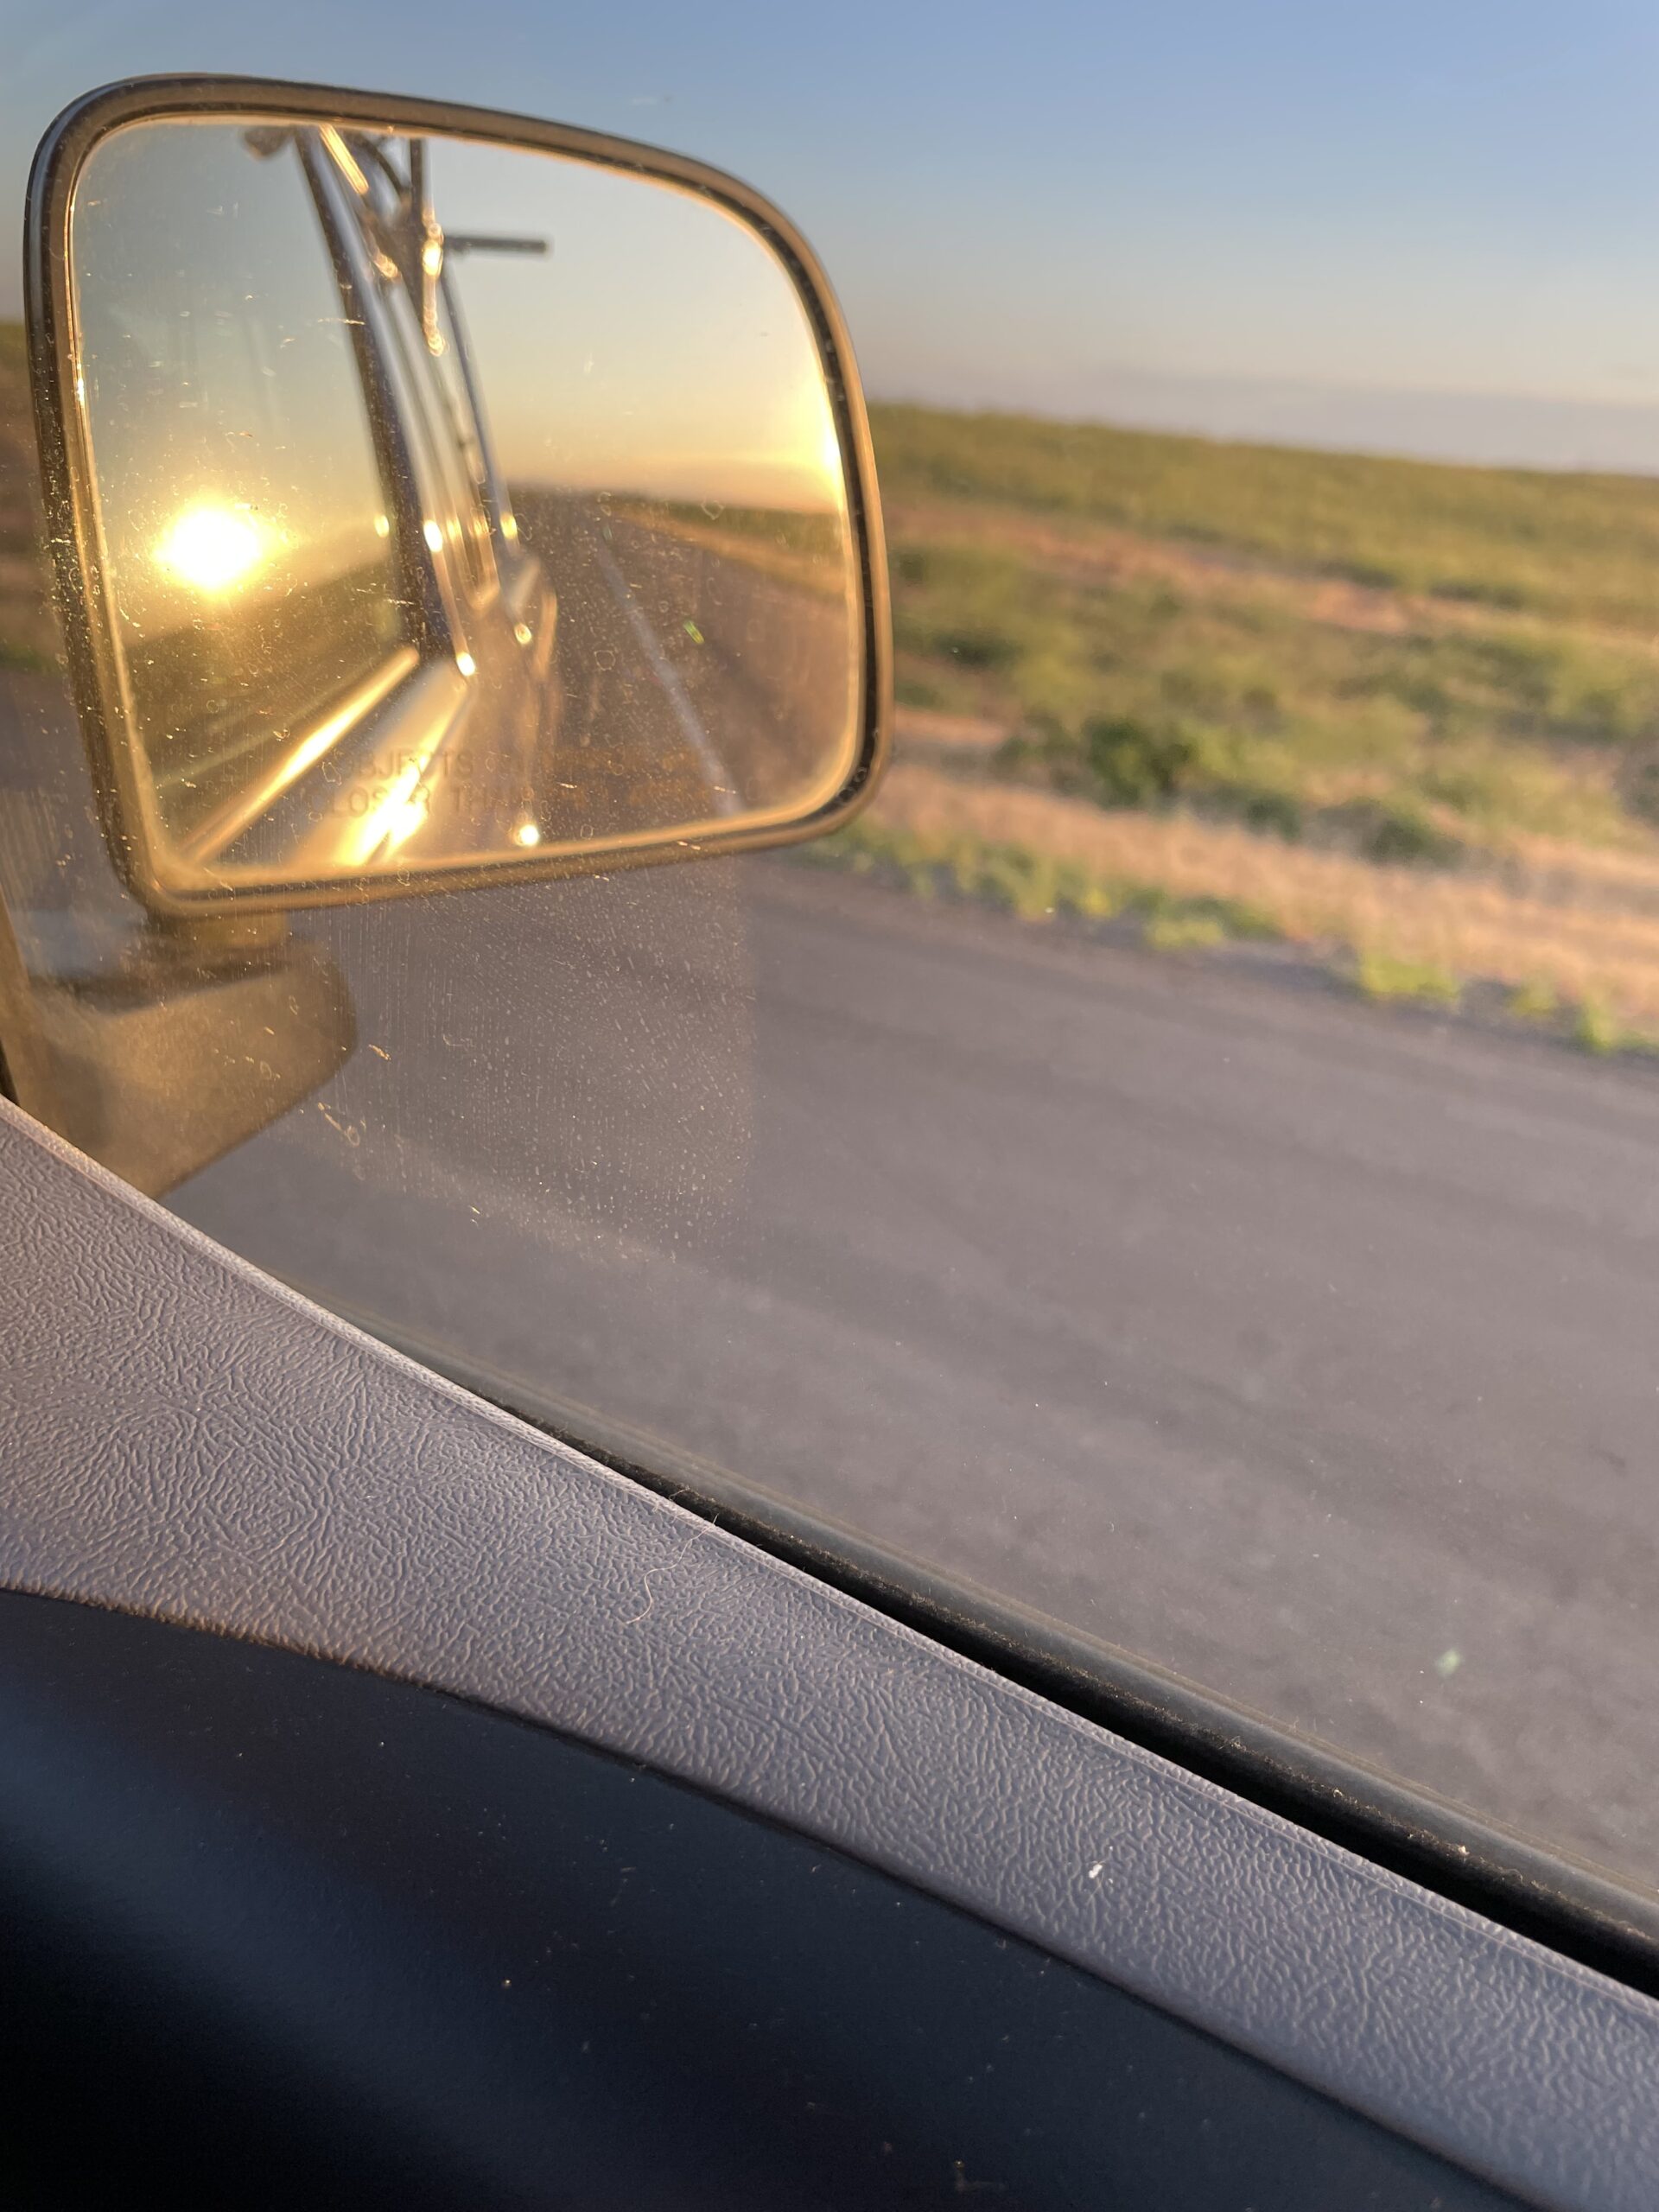 Sun setting in rearview mirror